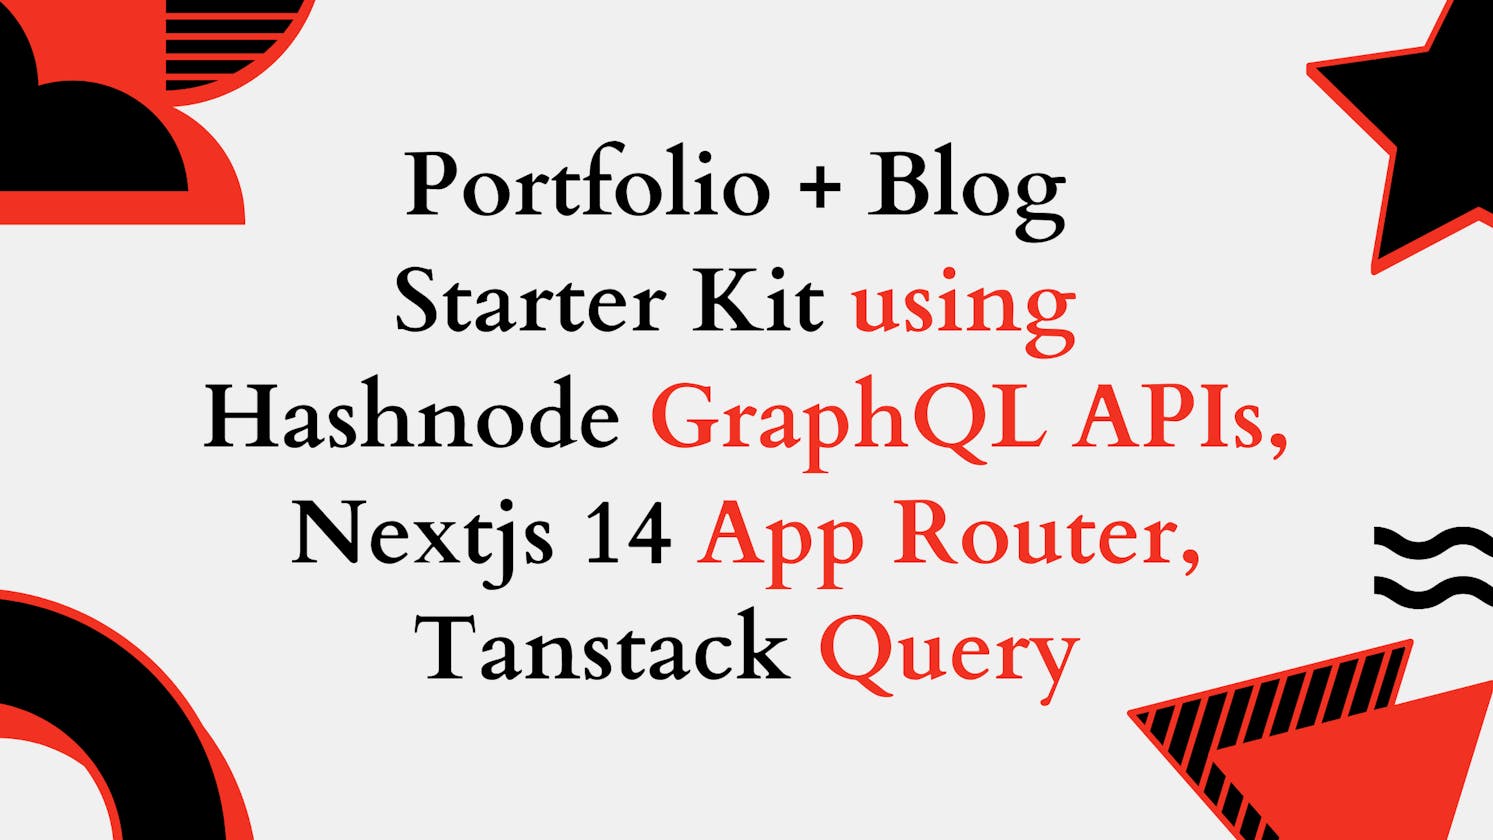 Introducing Portfolio + Blog Starter Kit using Hashnode GraphQL APIs, Nextjs 14 App Router, Tanstack Query